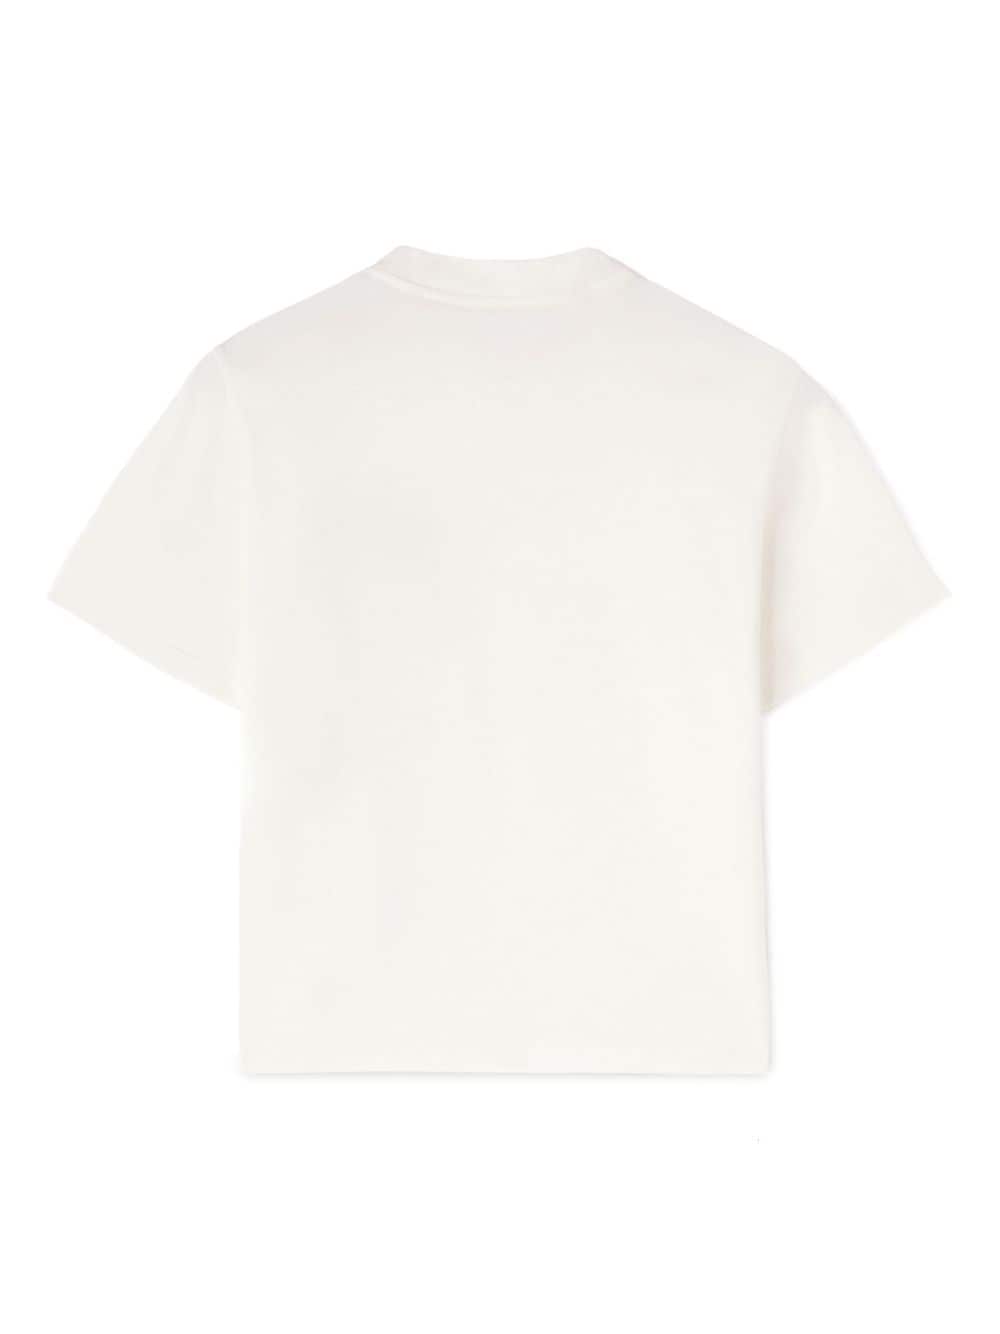 White/black cotton T-shirt